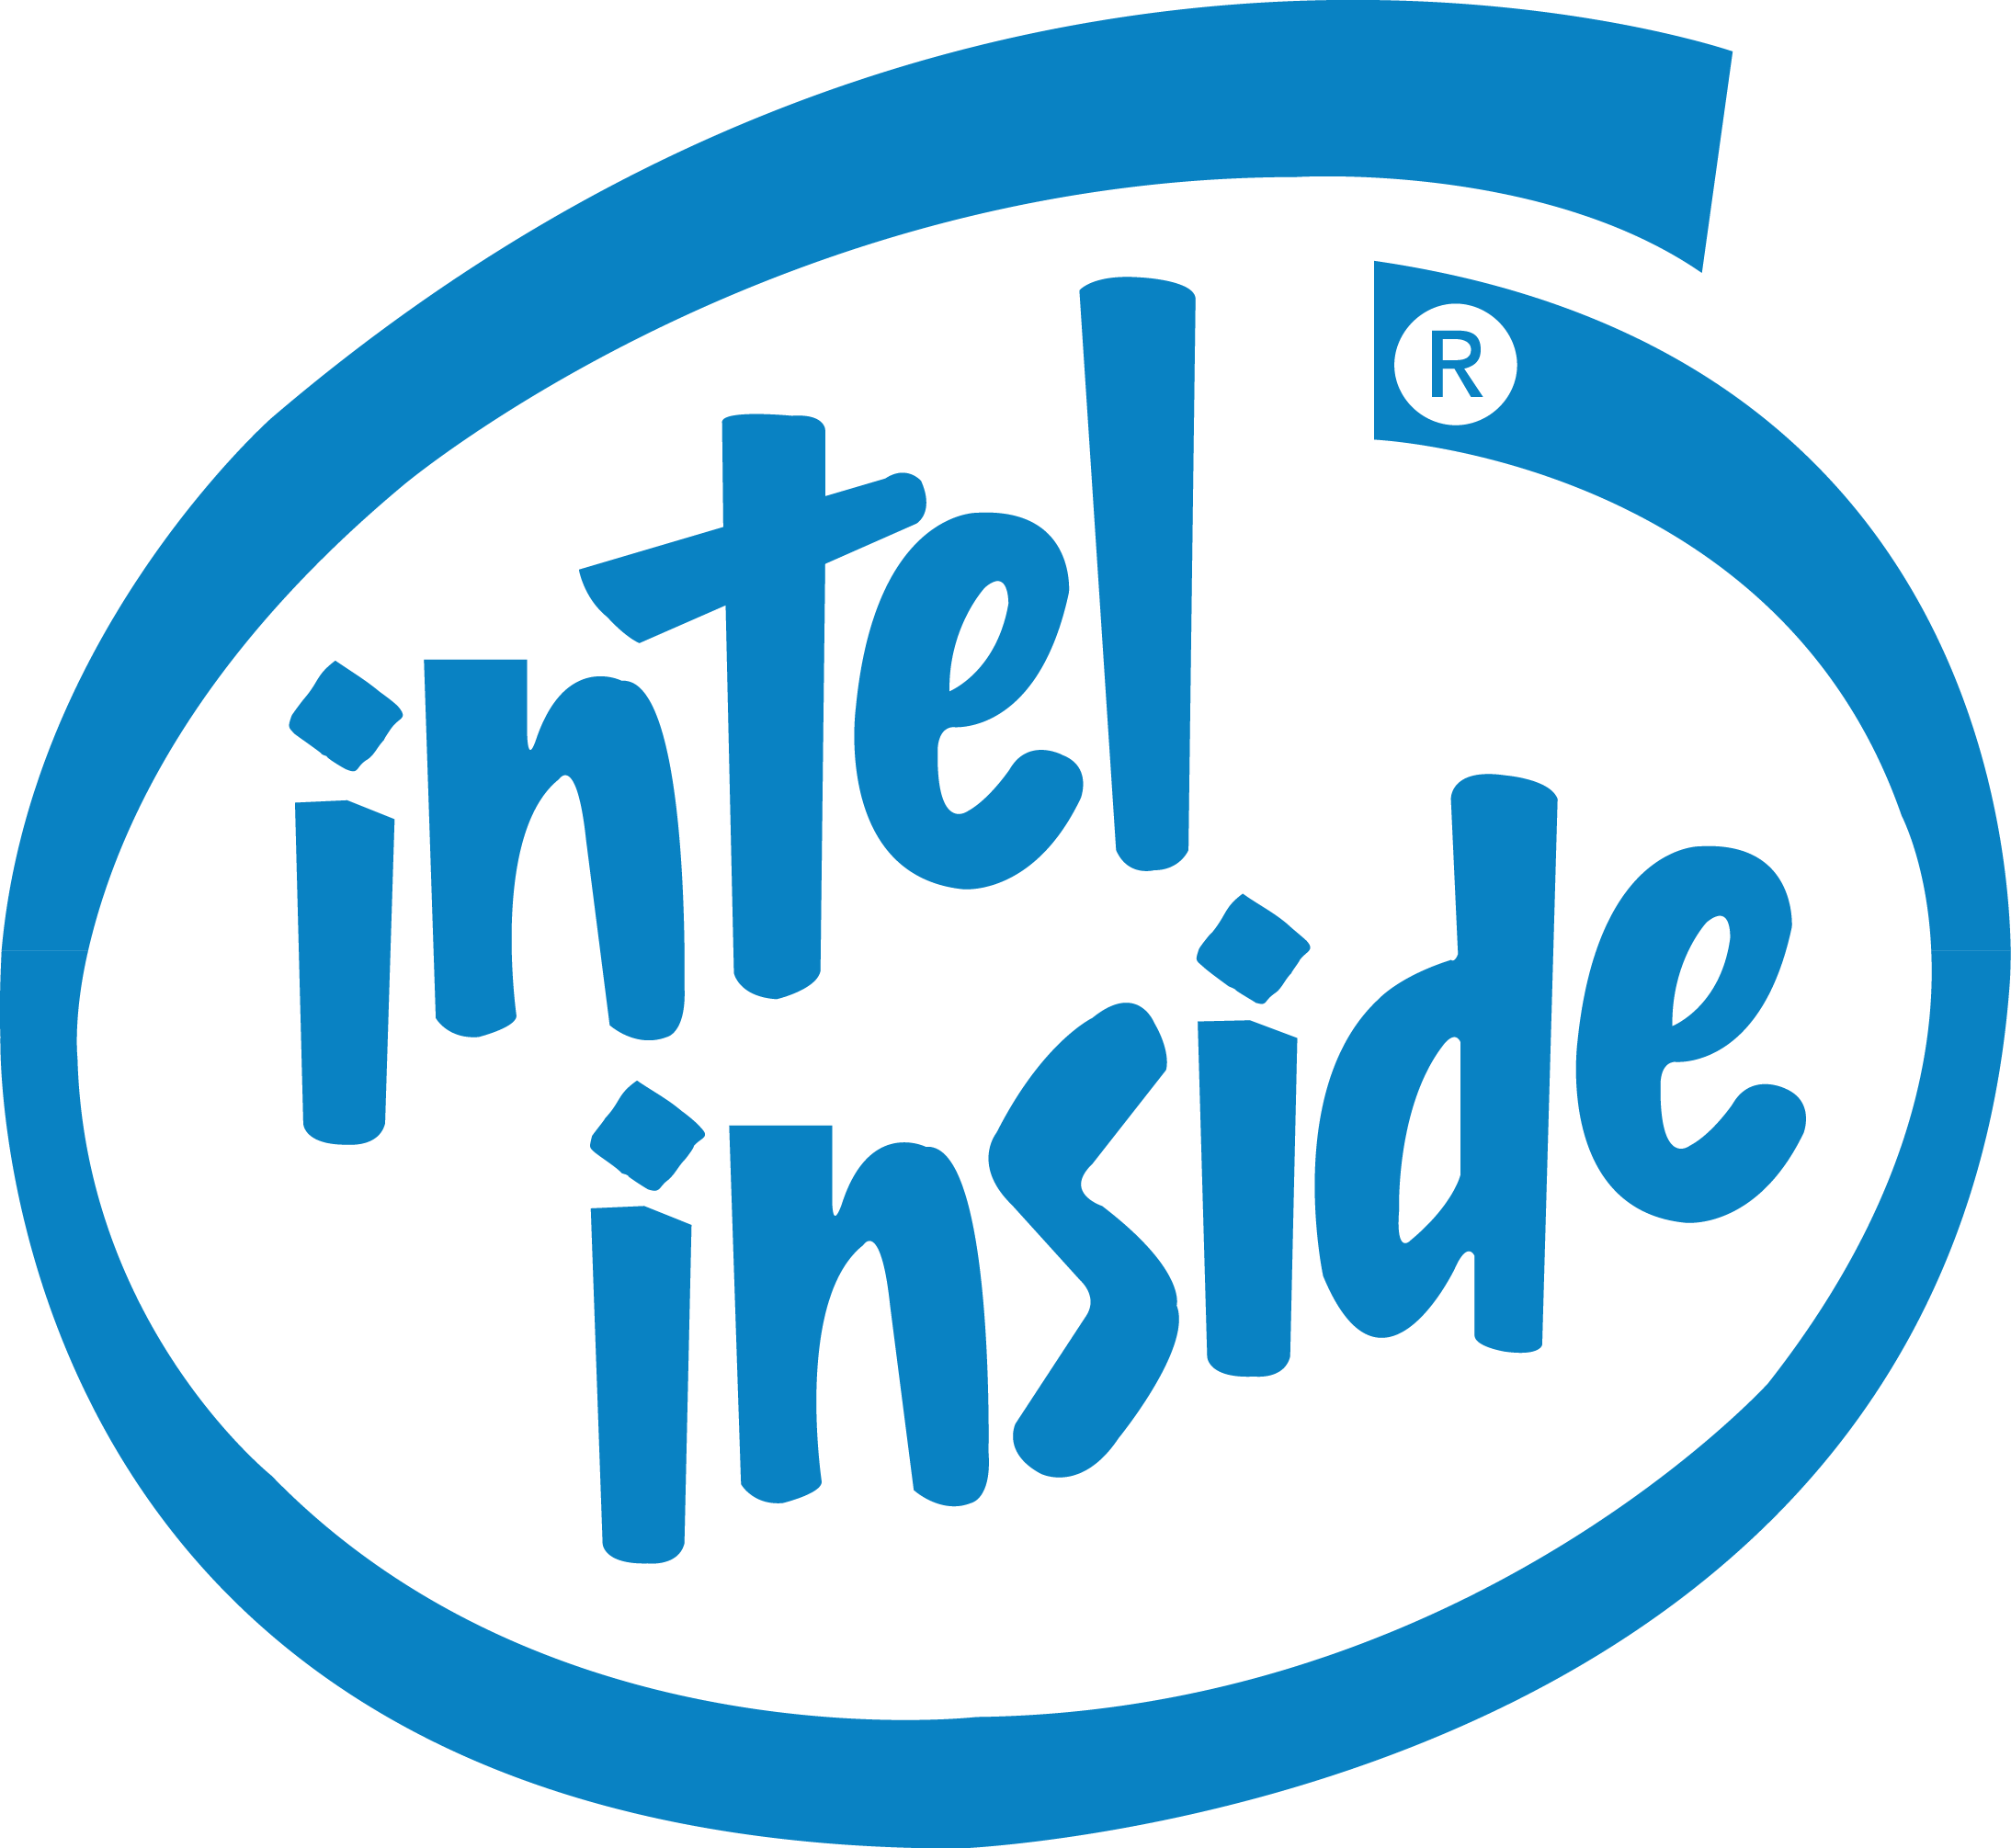 Intel Inside Logo - Intel Pentium Iii 1.4 Ghz Processor (2188x2011)